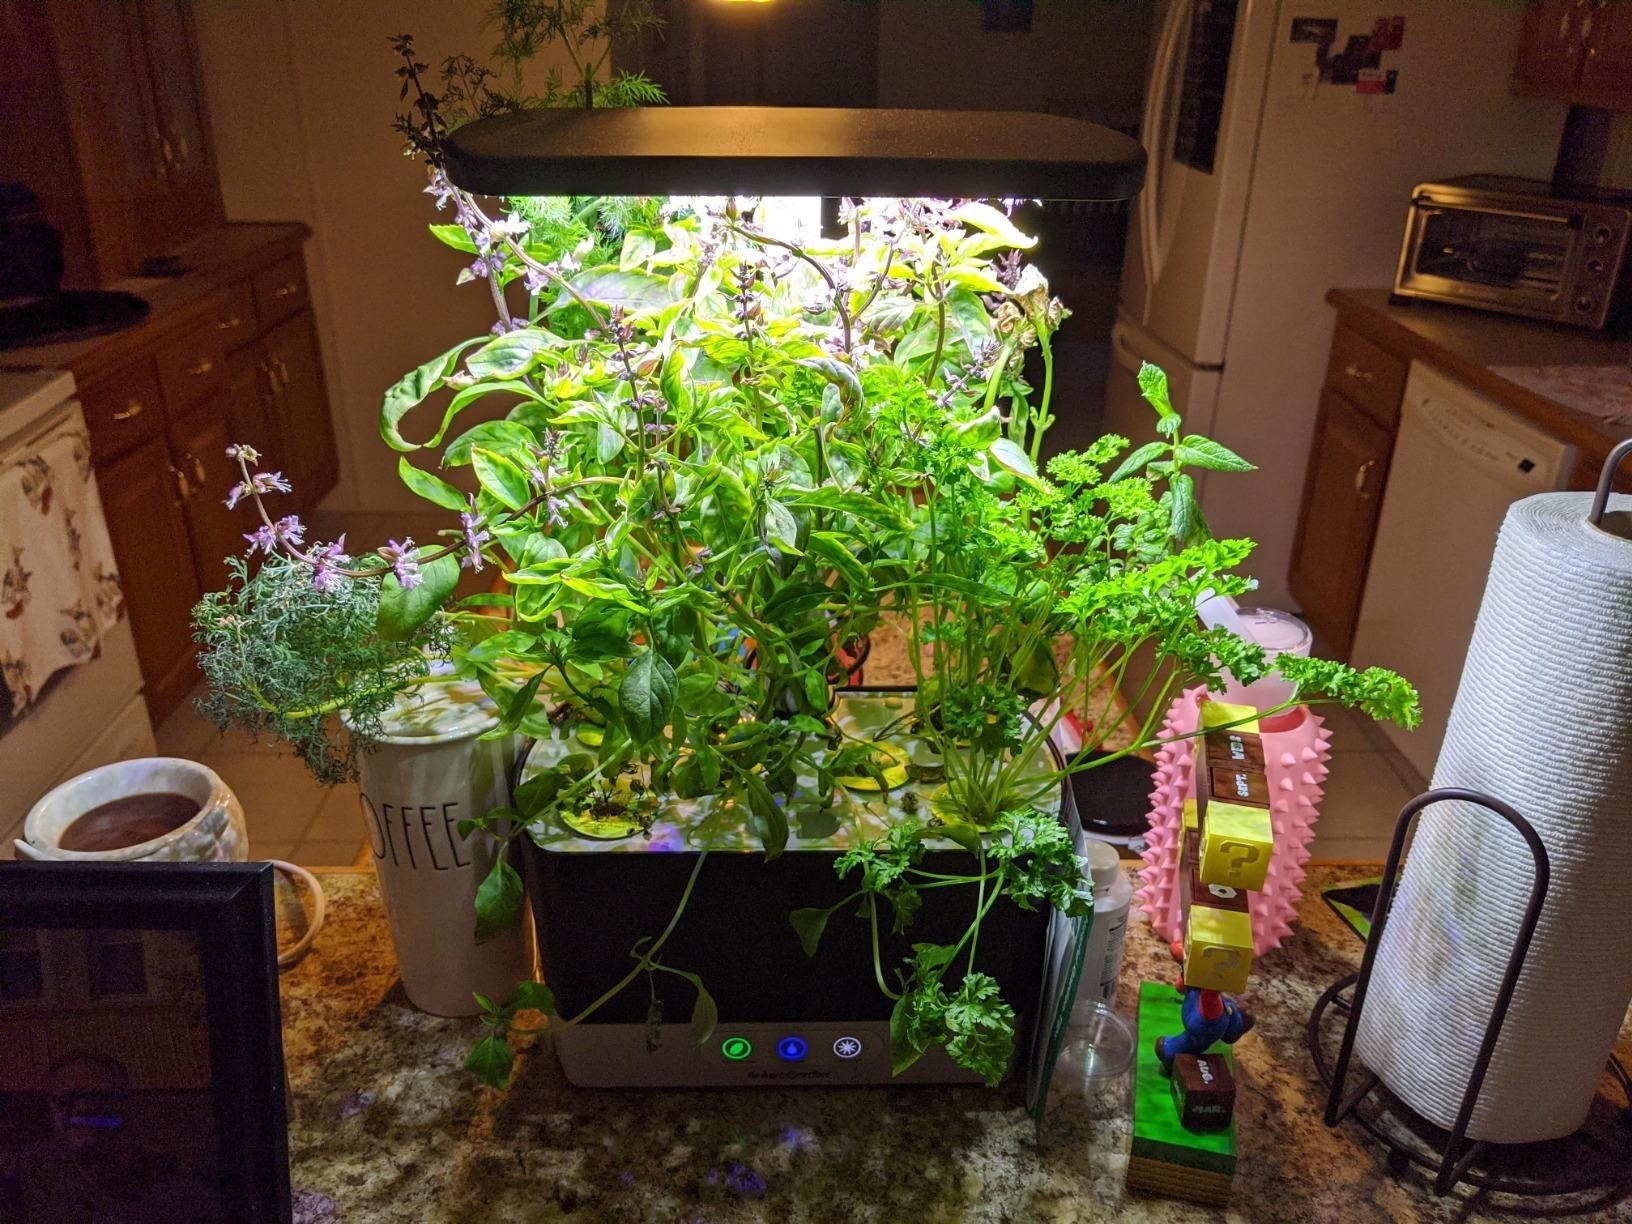 Reviewer photo of their indoor herb garden